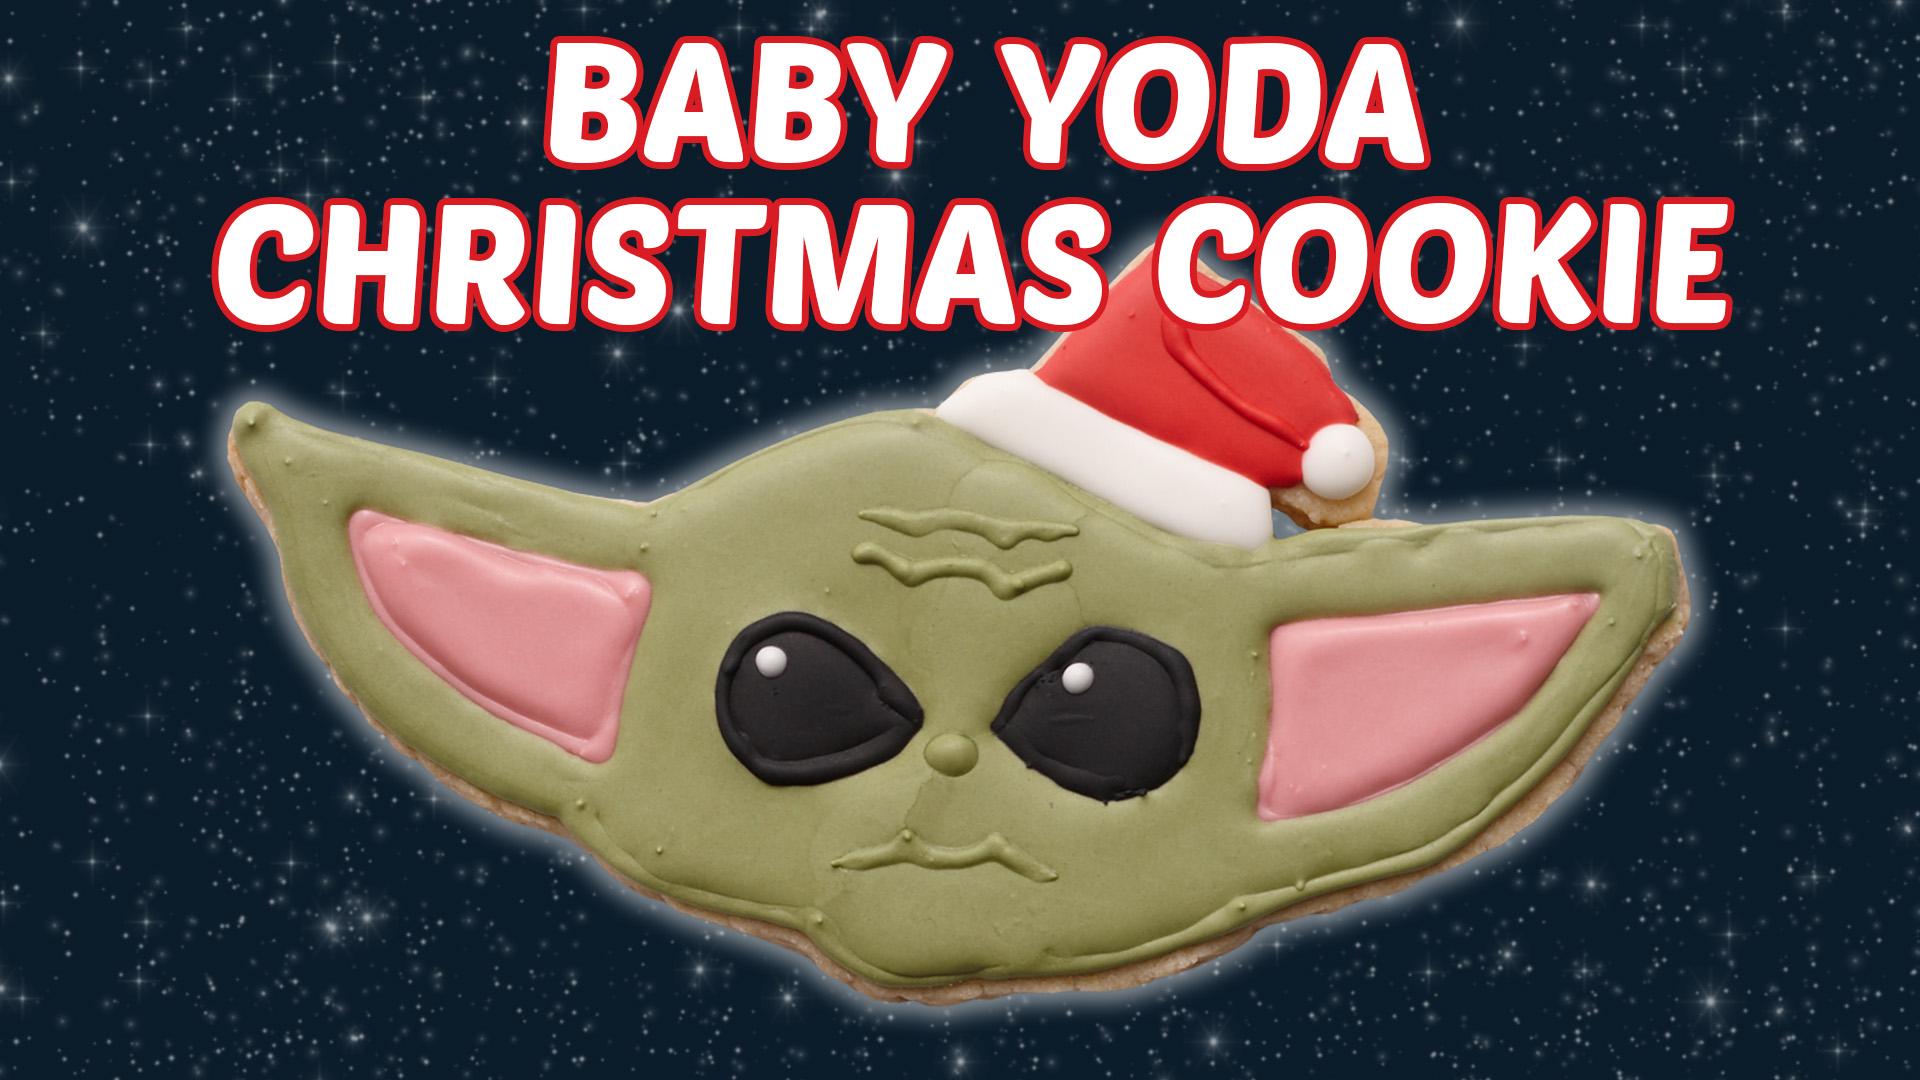 How to Make Baby Yoda Christmas Cookie